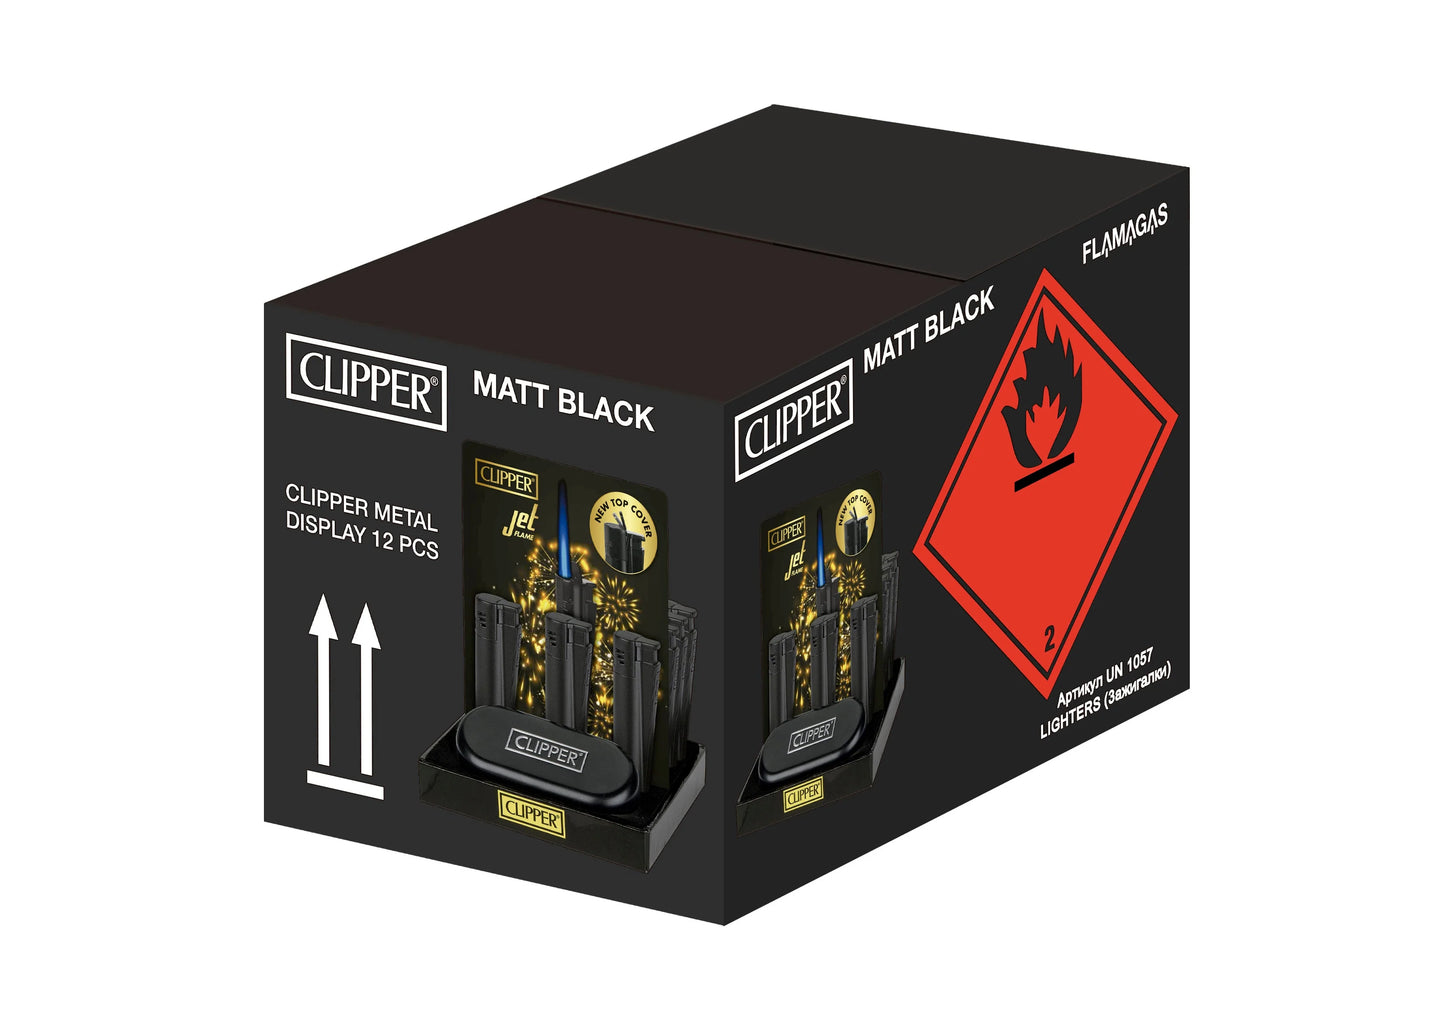 CLIPPER Lighters Metal Black Matte 12CT